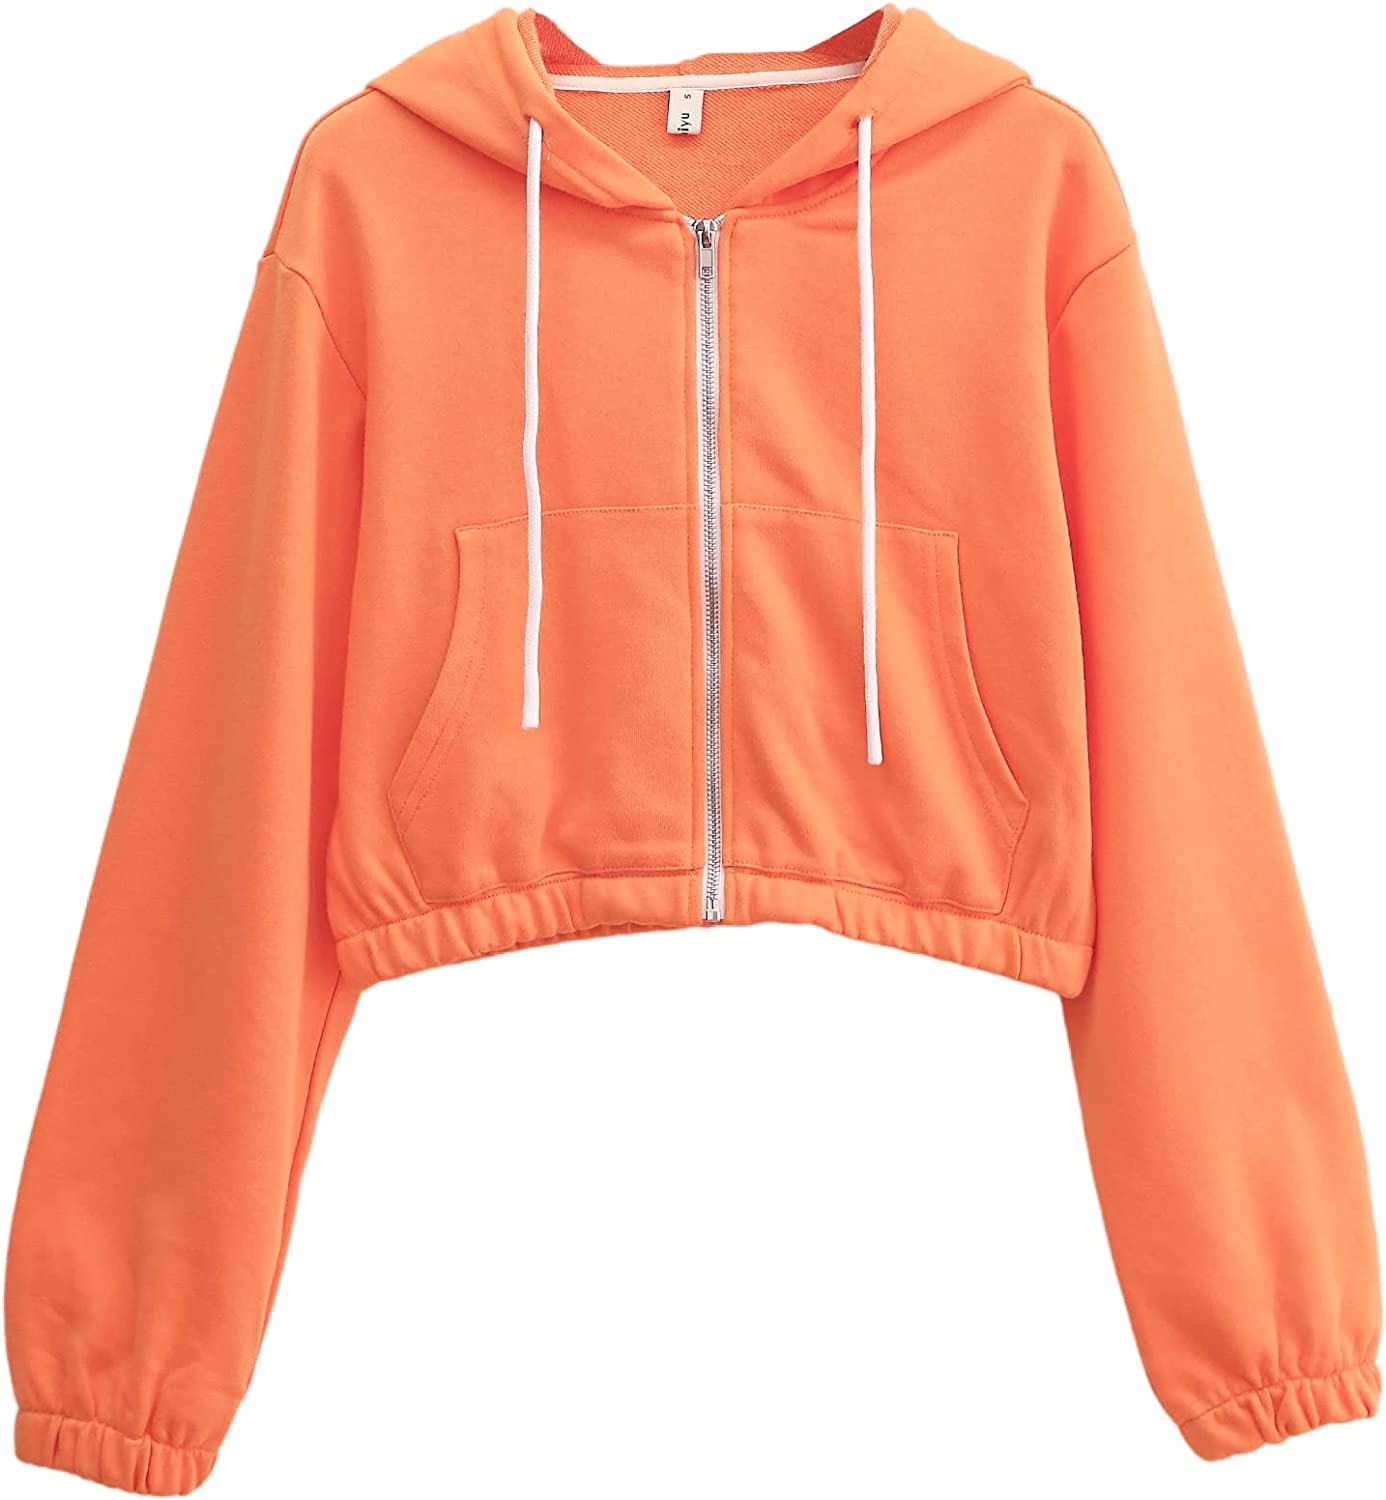 NTG Fad Orange / X-Large Amazhiyu Women’s Cropped Zip up Hoodie with Pockets Casual Long Sleeve Crop Sweatshirt Jacket